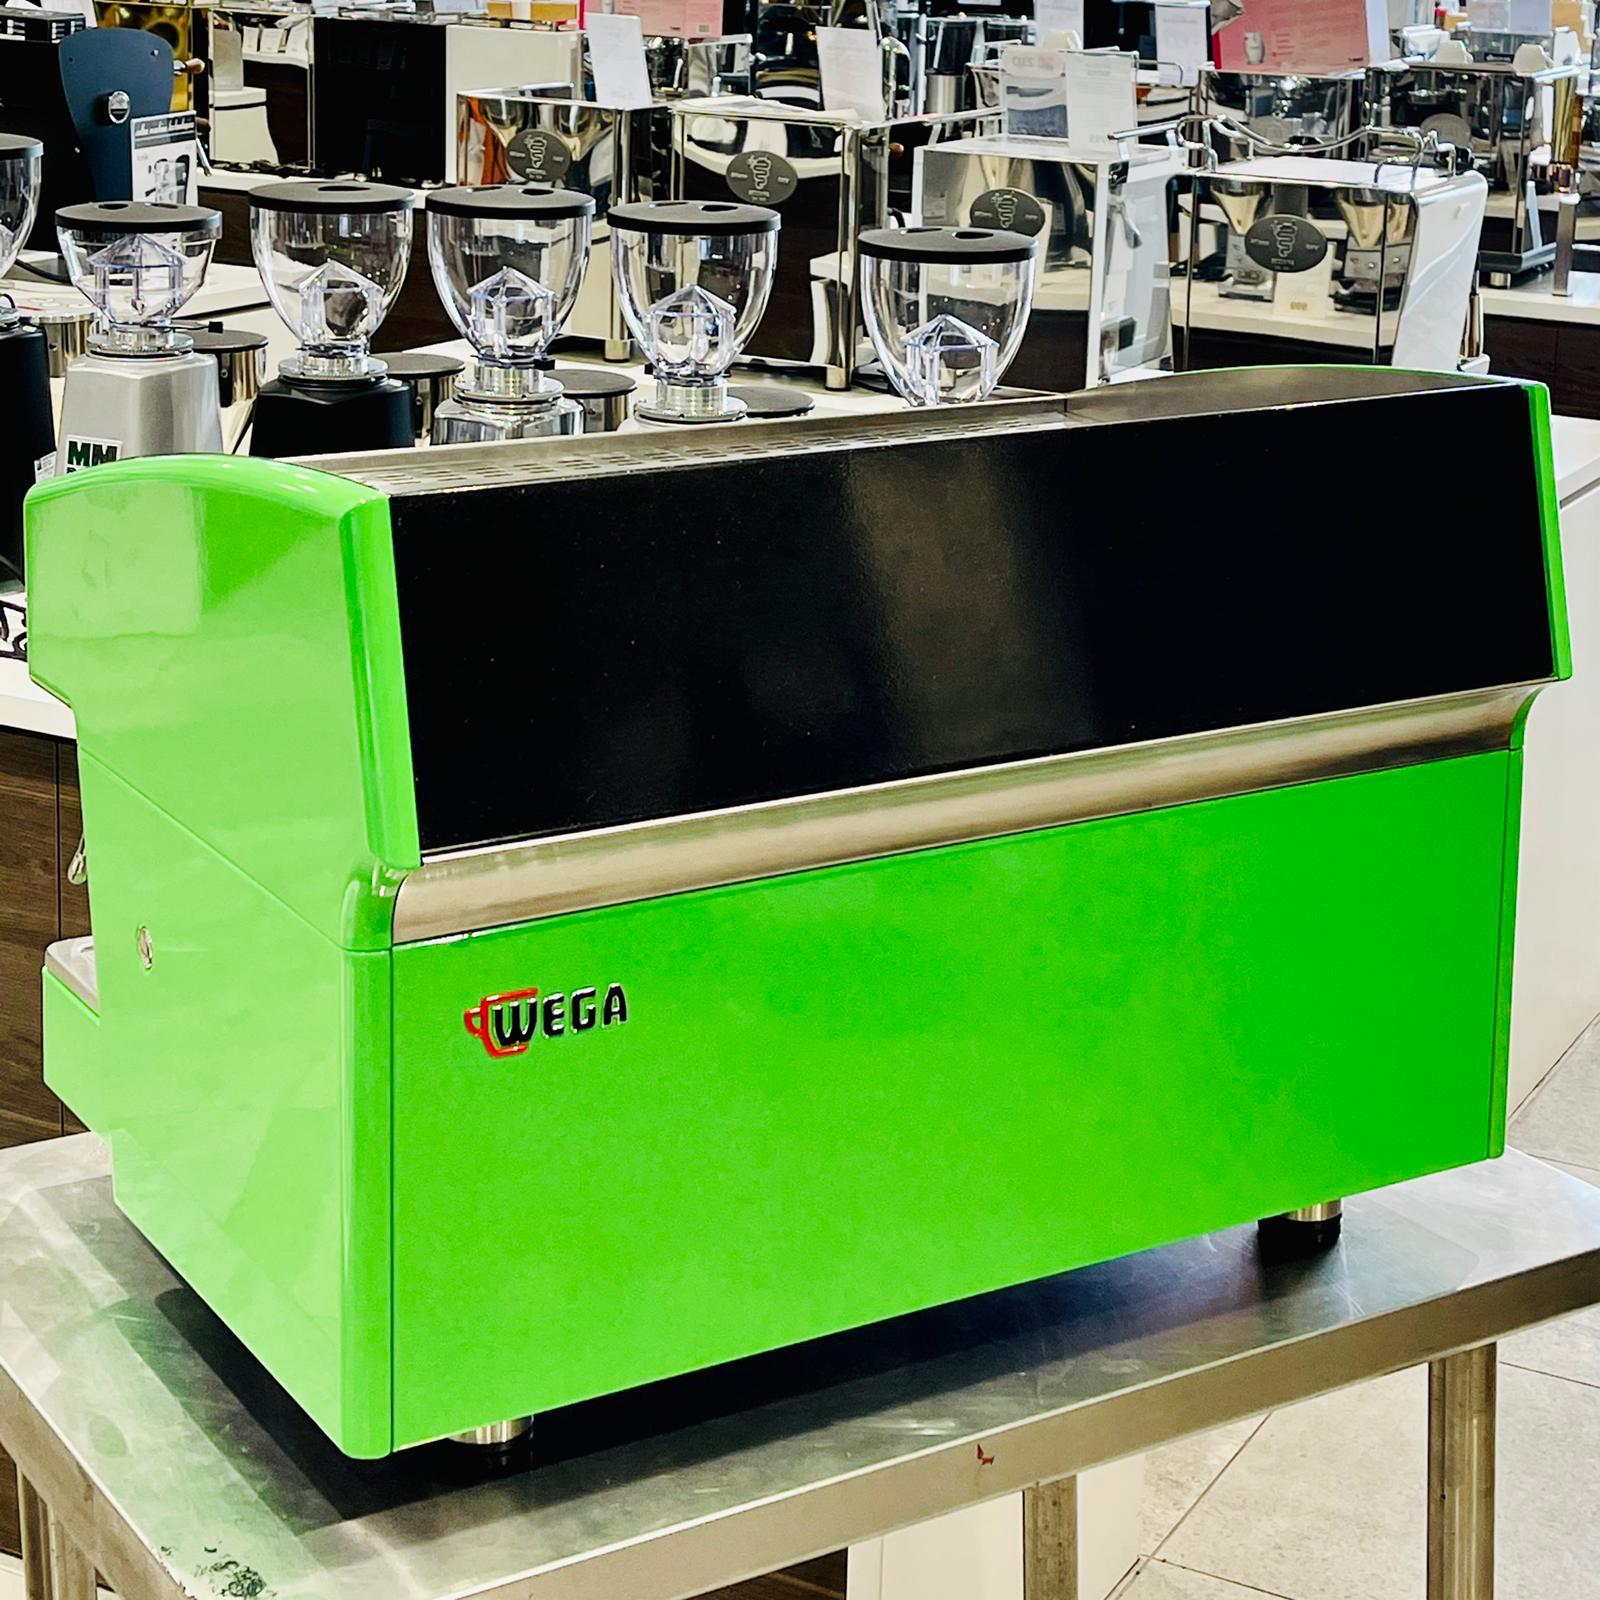 Wega Wega Atlas Used Hot Green Commercial Coffee Machine